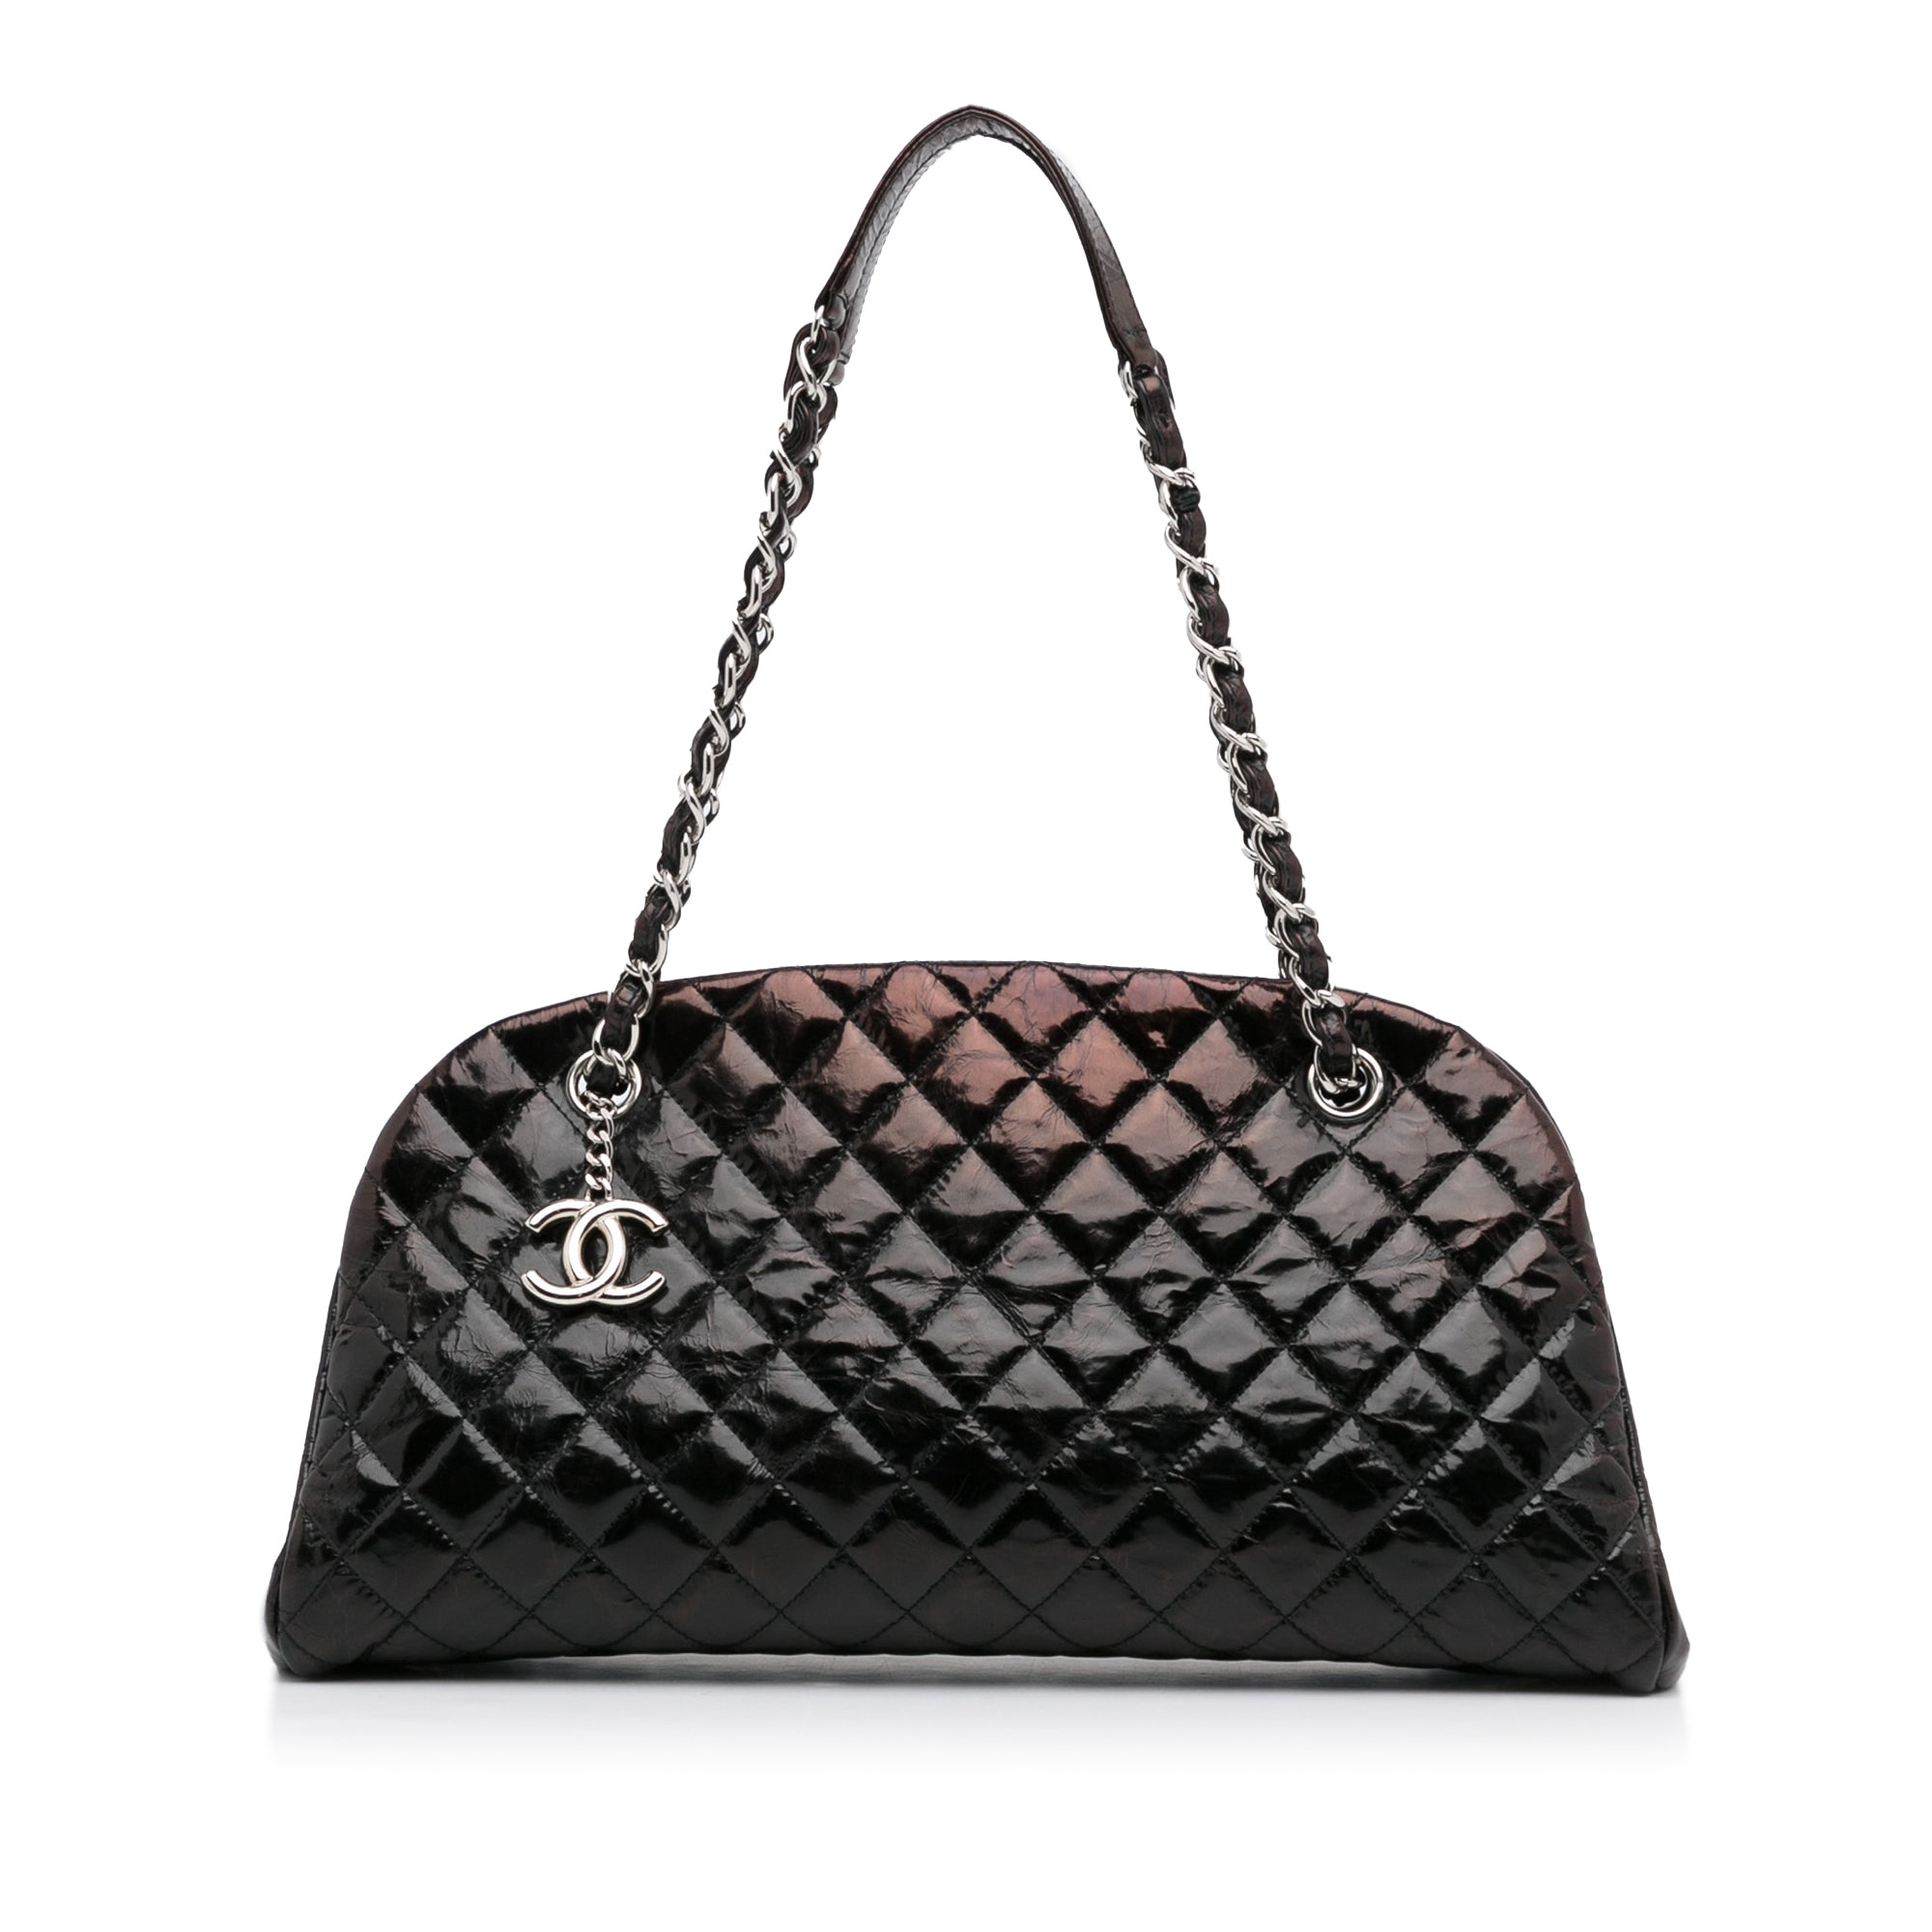 Mademoiselle leather handbag Chanel Beige in Leather - 35461708